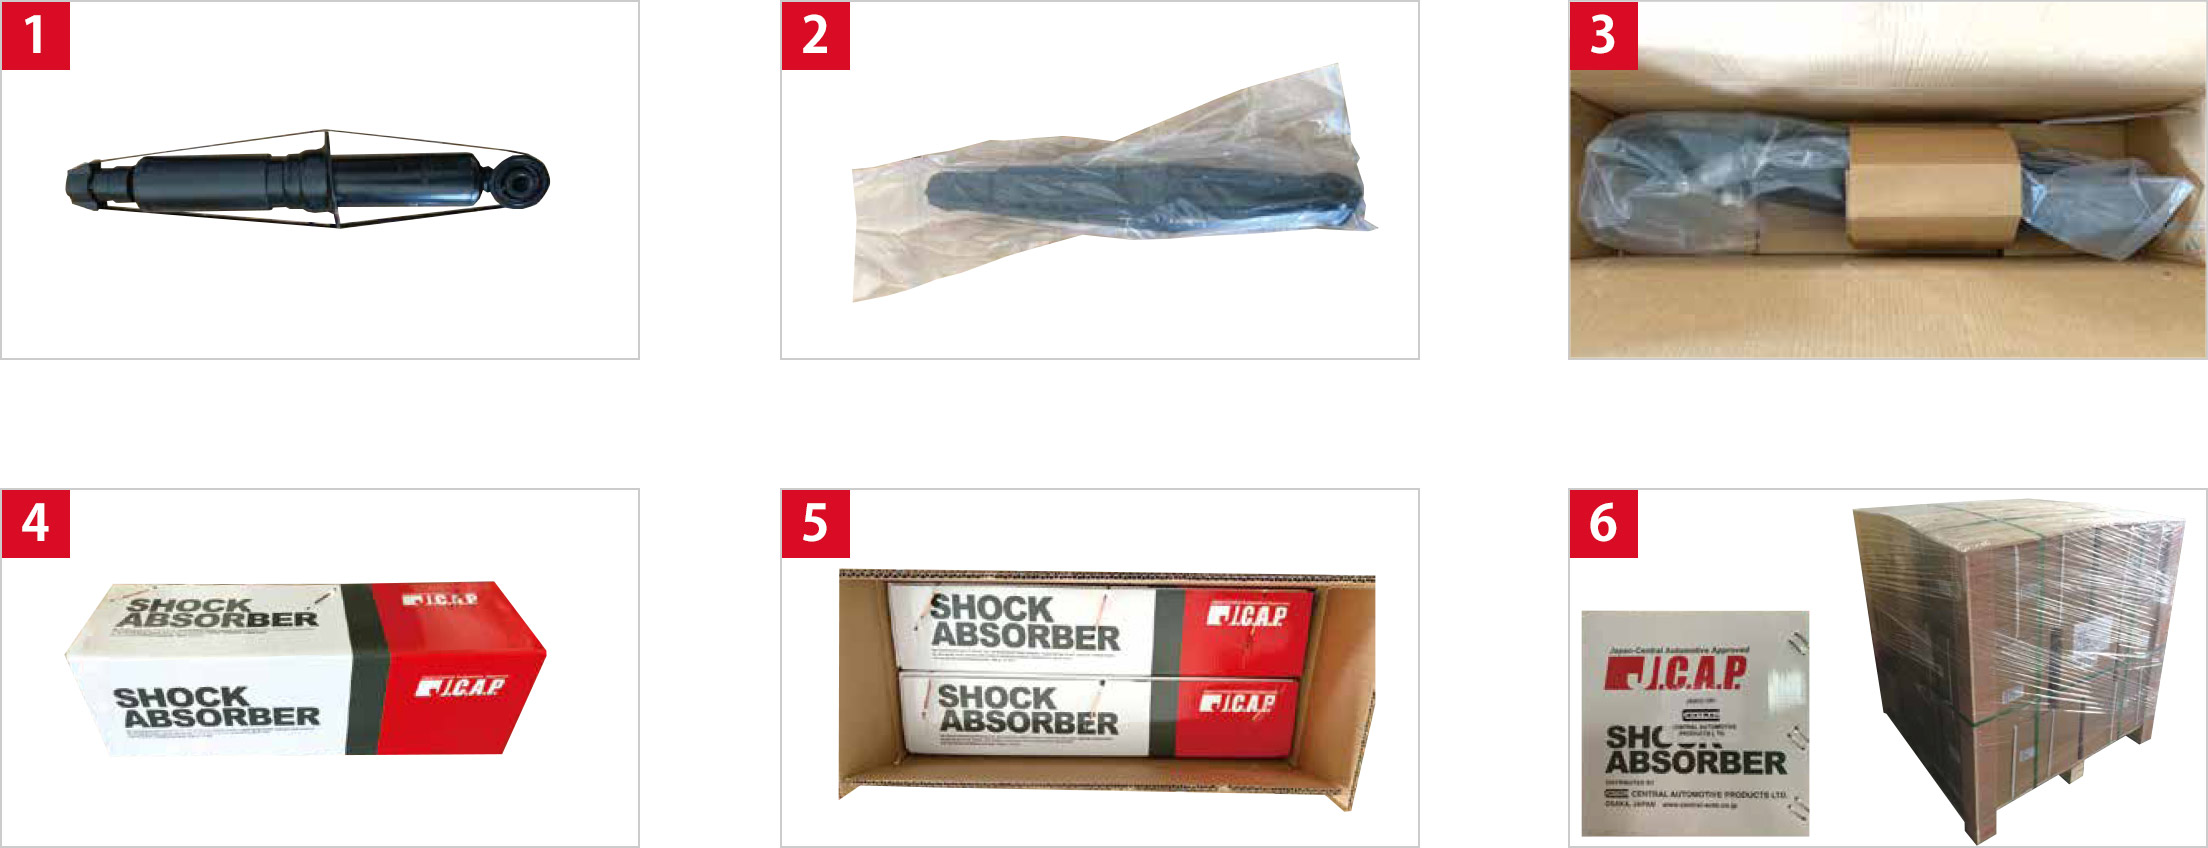 Shock Absorbers packages